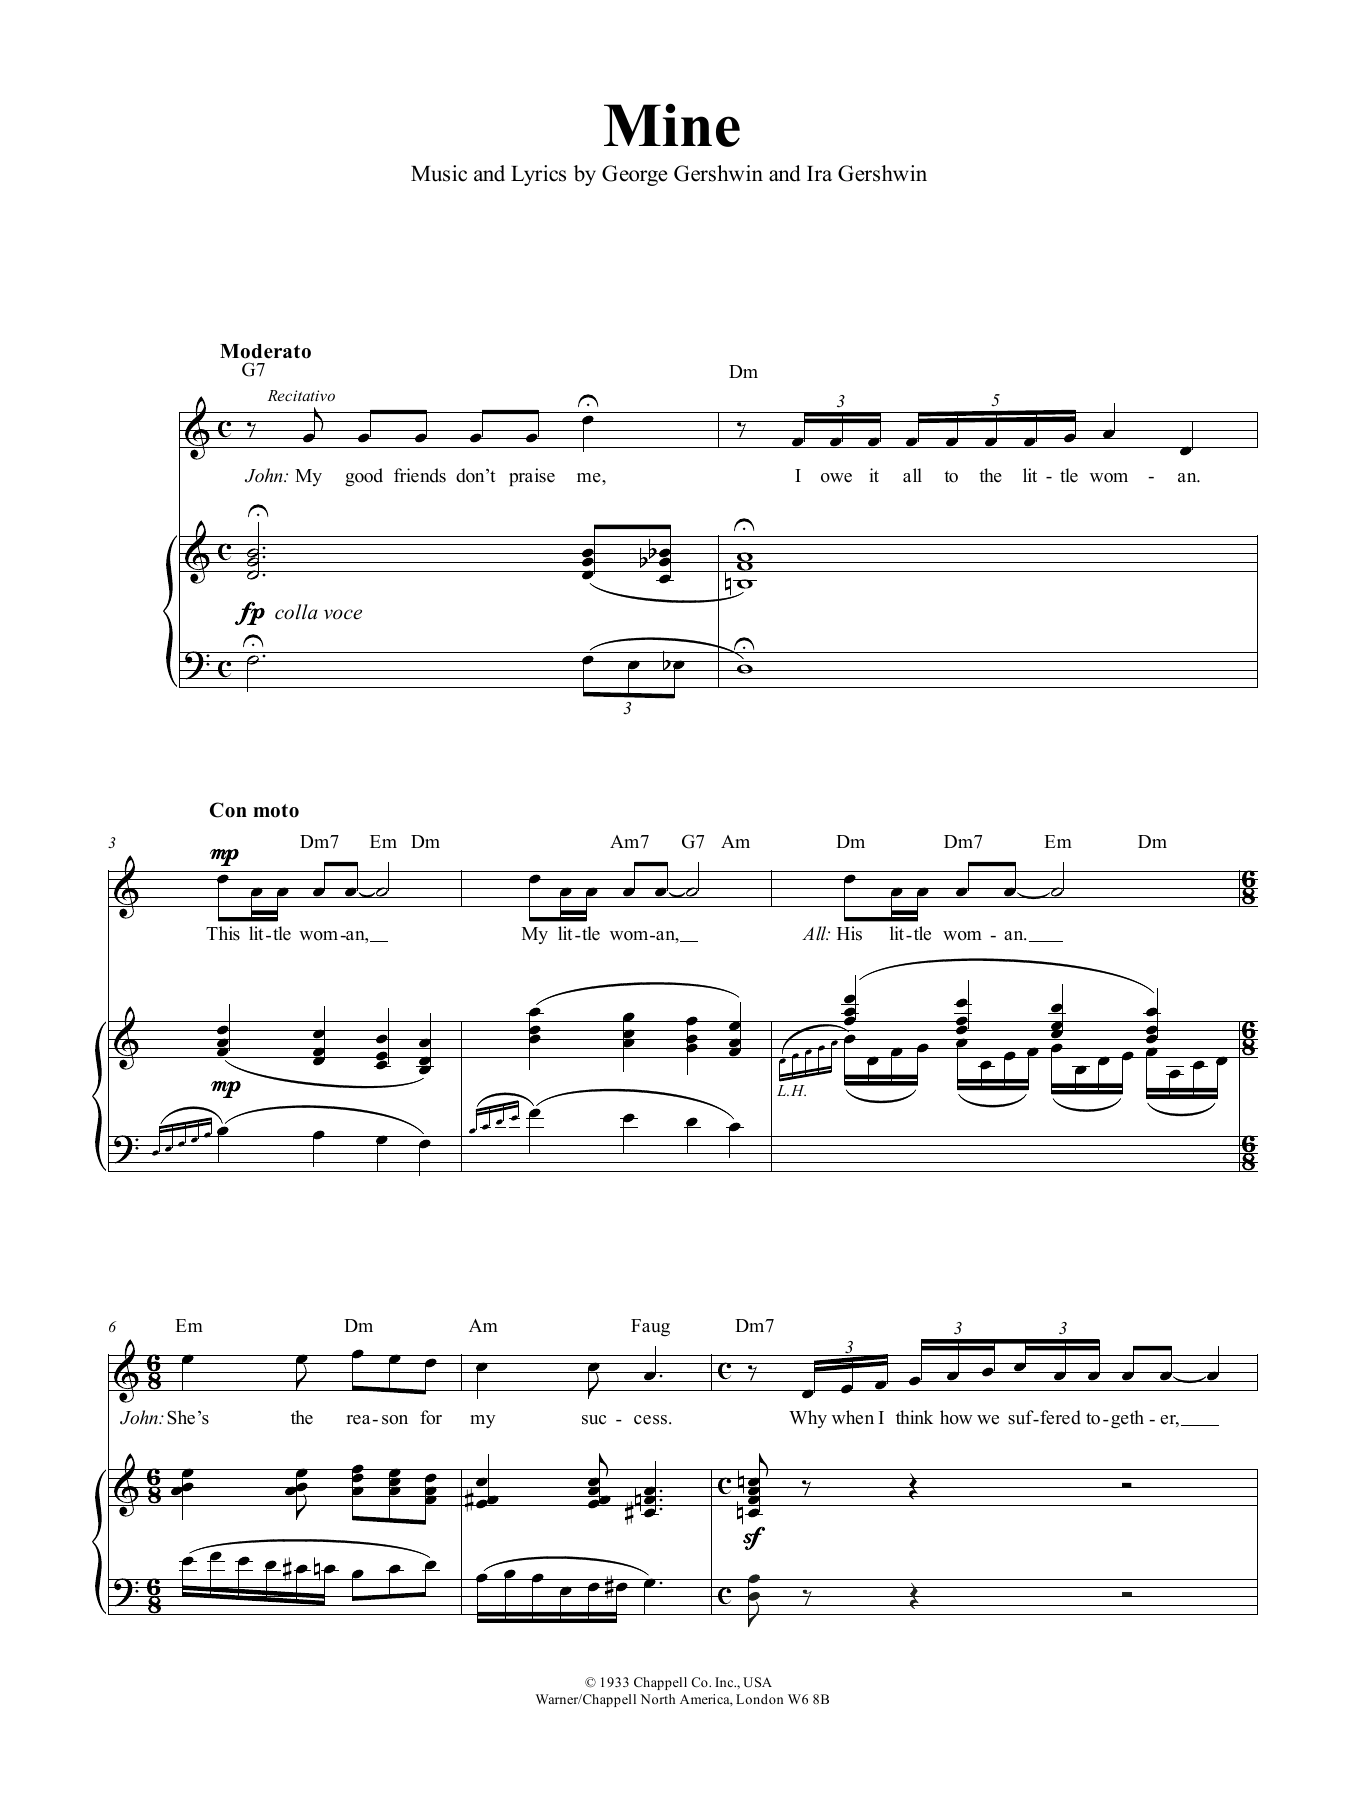 Download George Gershwin Mine Sheet Music